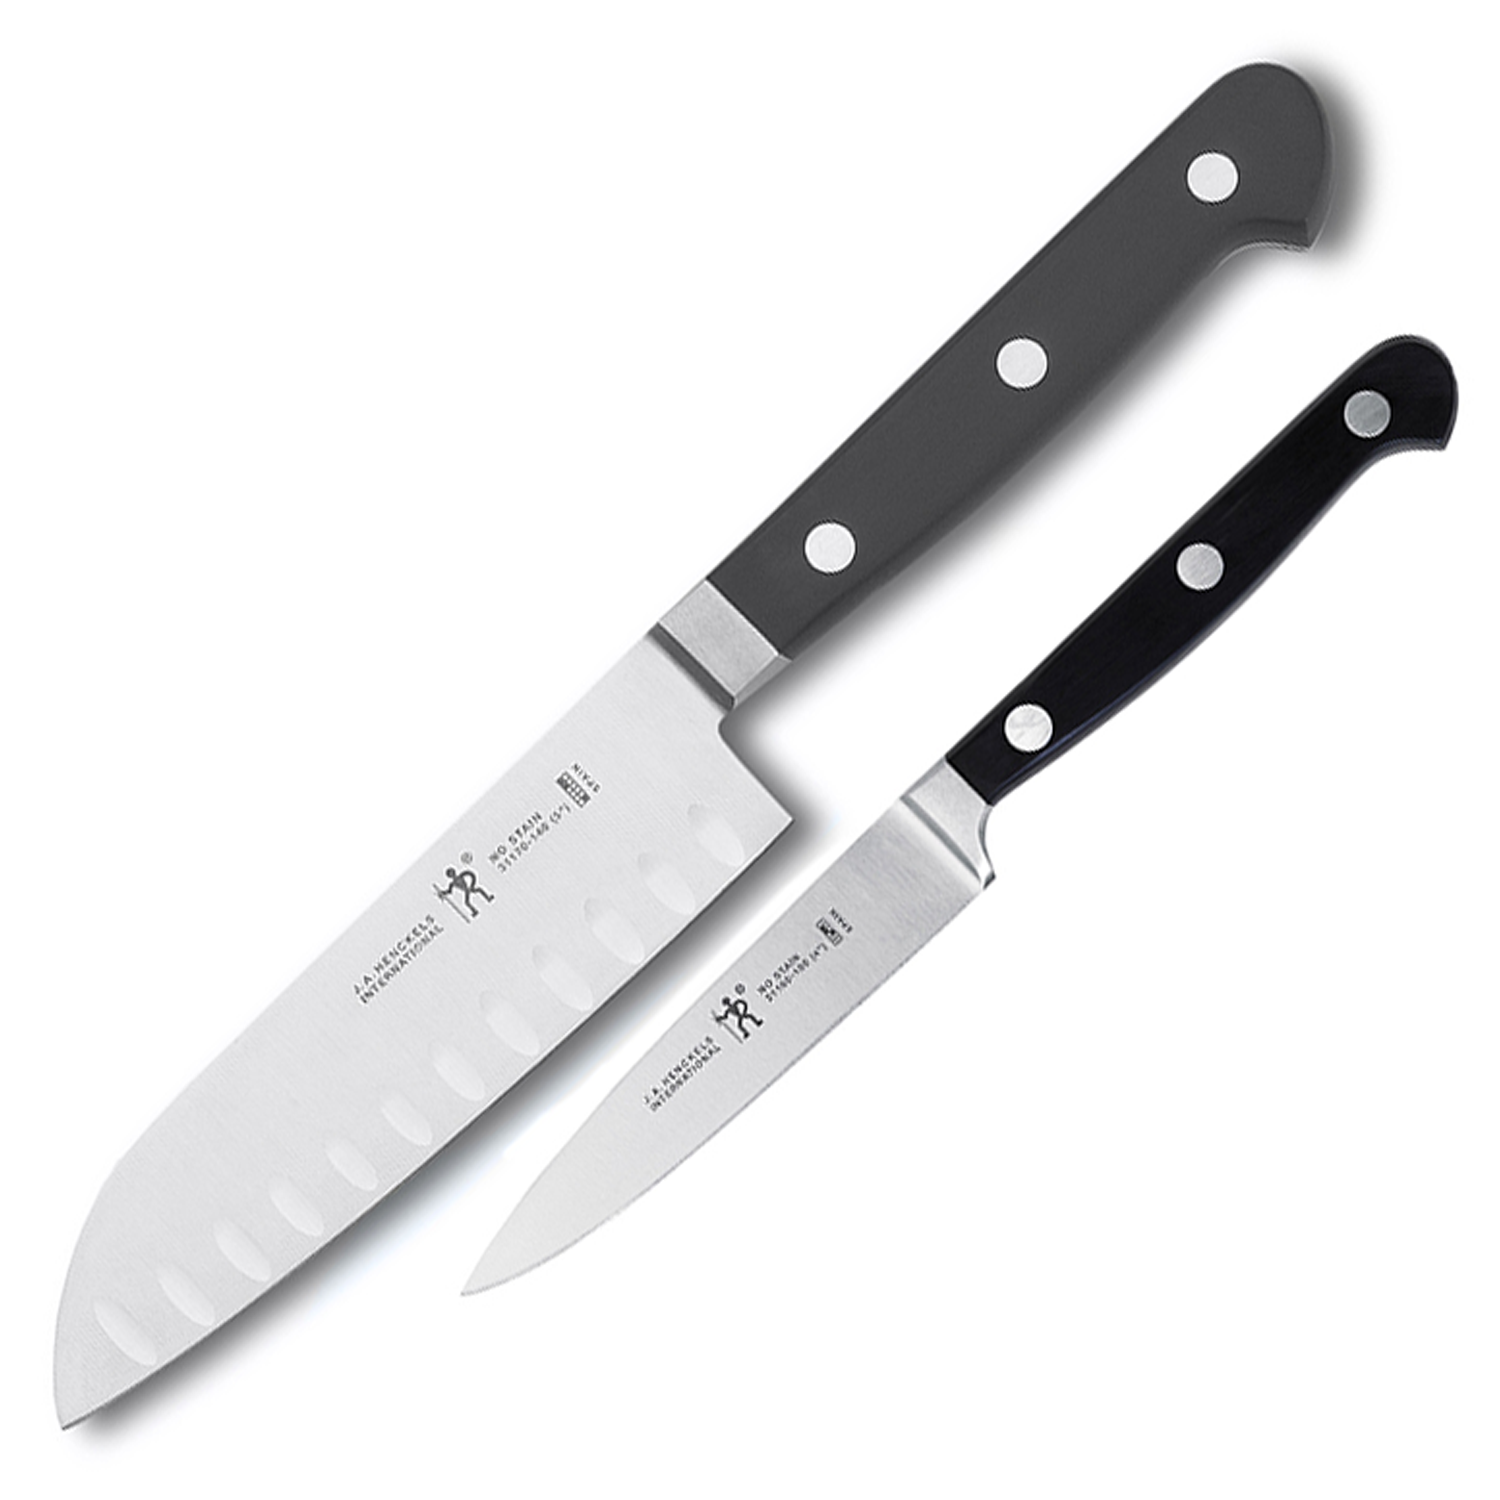 J.A. Henckels International Classic 2-pc Asian Knife Set